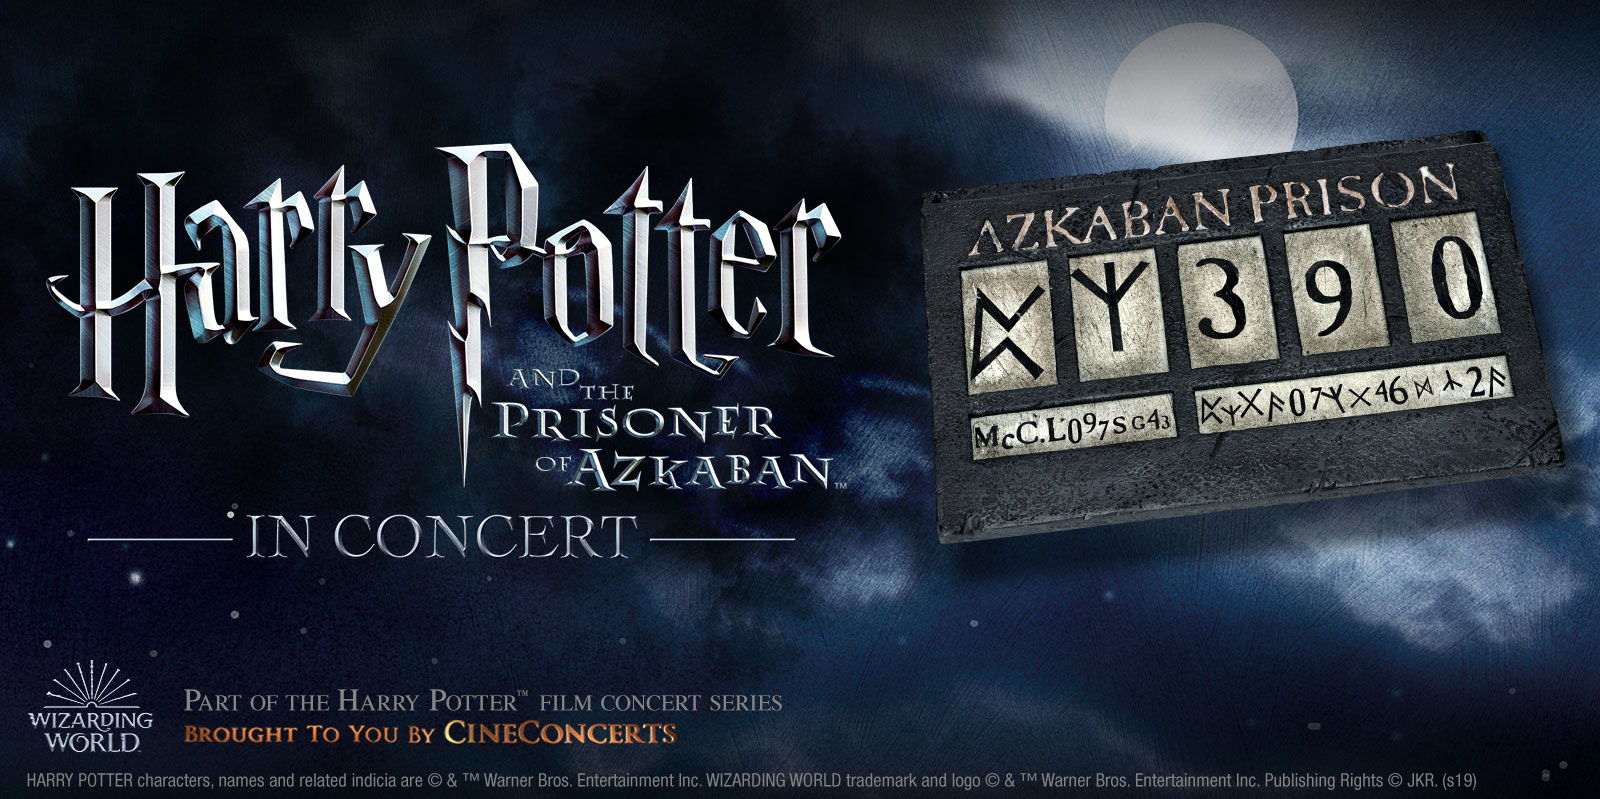 Harry Potter And The Prisoner of Azkaban™ In Concert promotional image